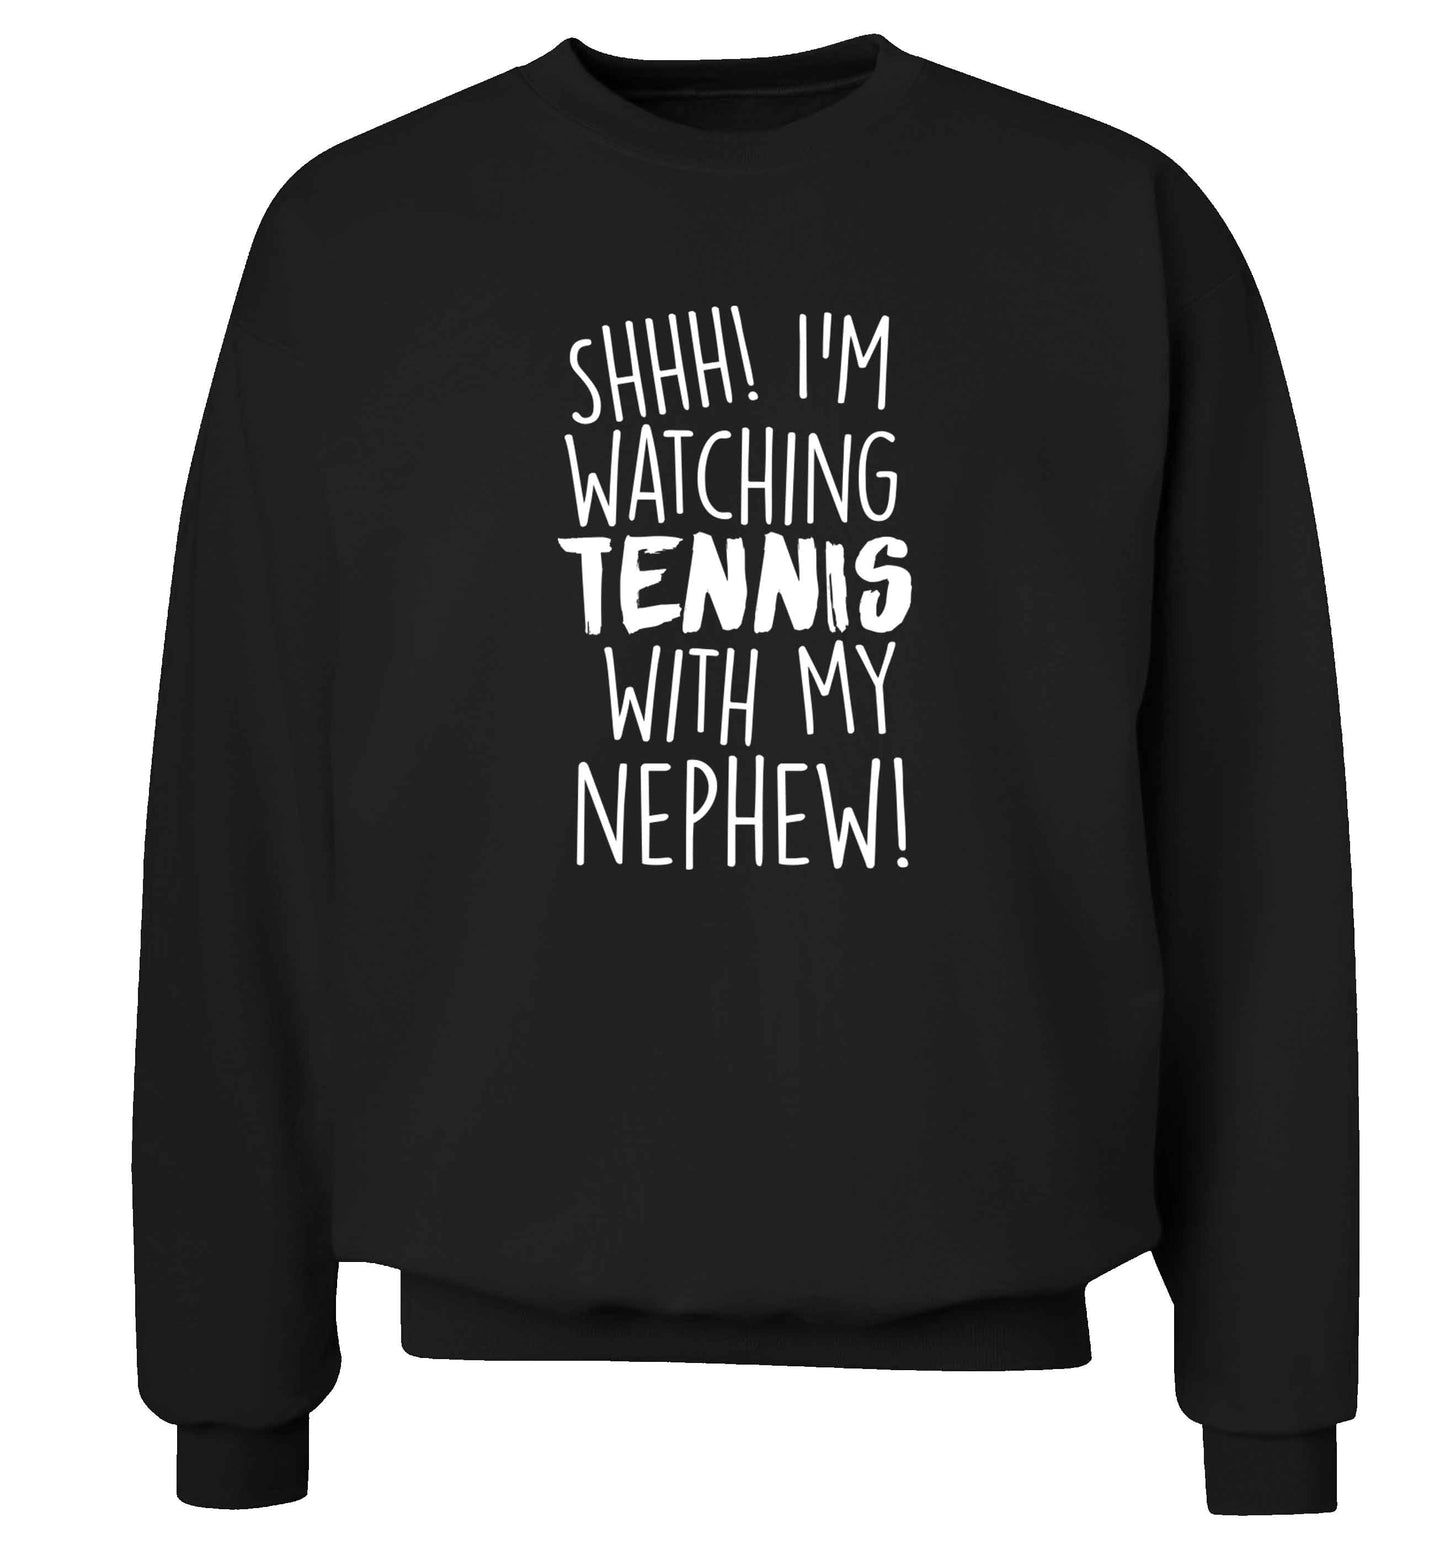 Shh! I'm watching tennis with my nephew! Adult's unisex black Sweater 2XL